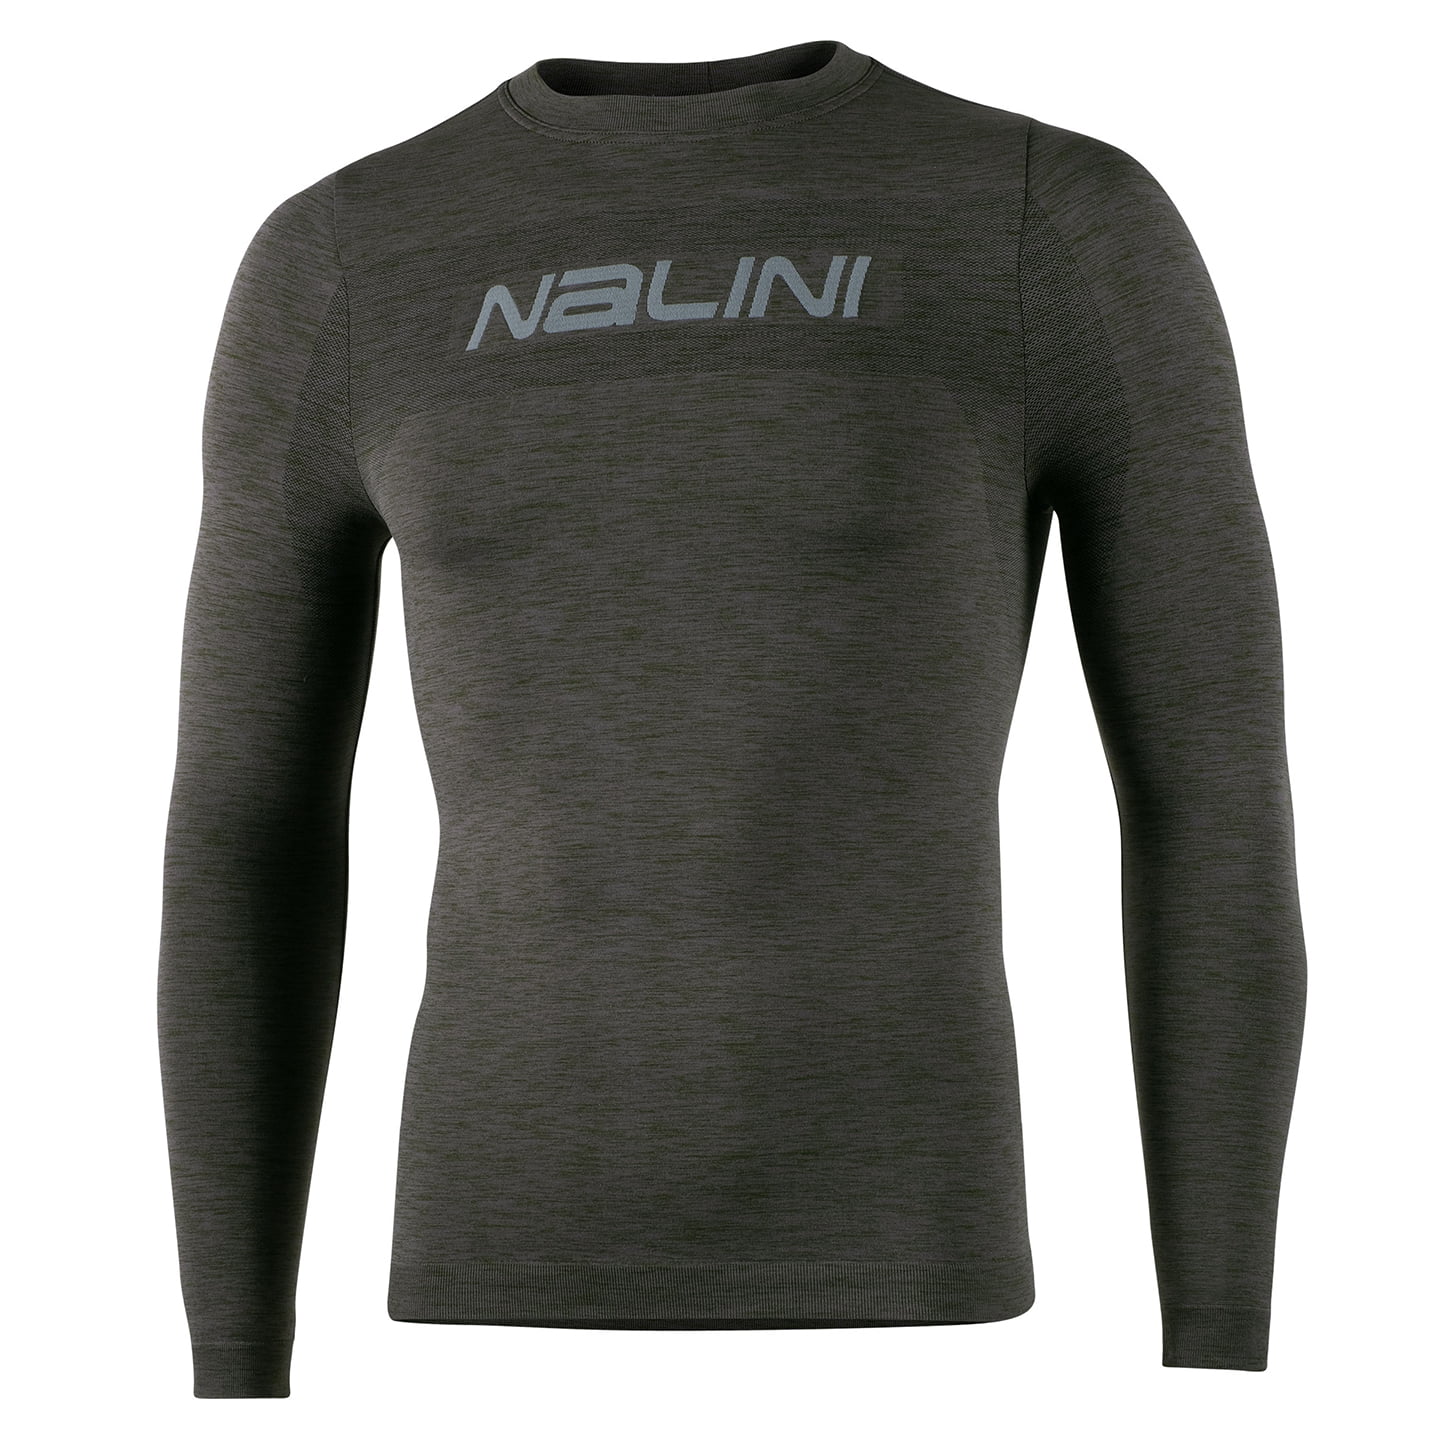 NALINI Melange Long Sleeve Cycling Base Layer Base Layer, for men, size L-XL